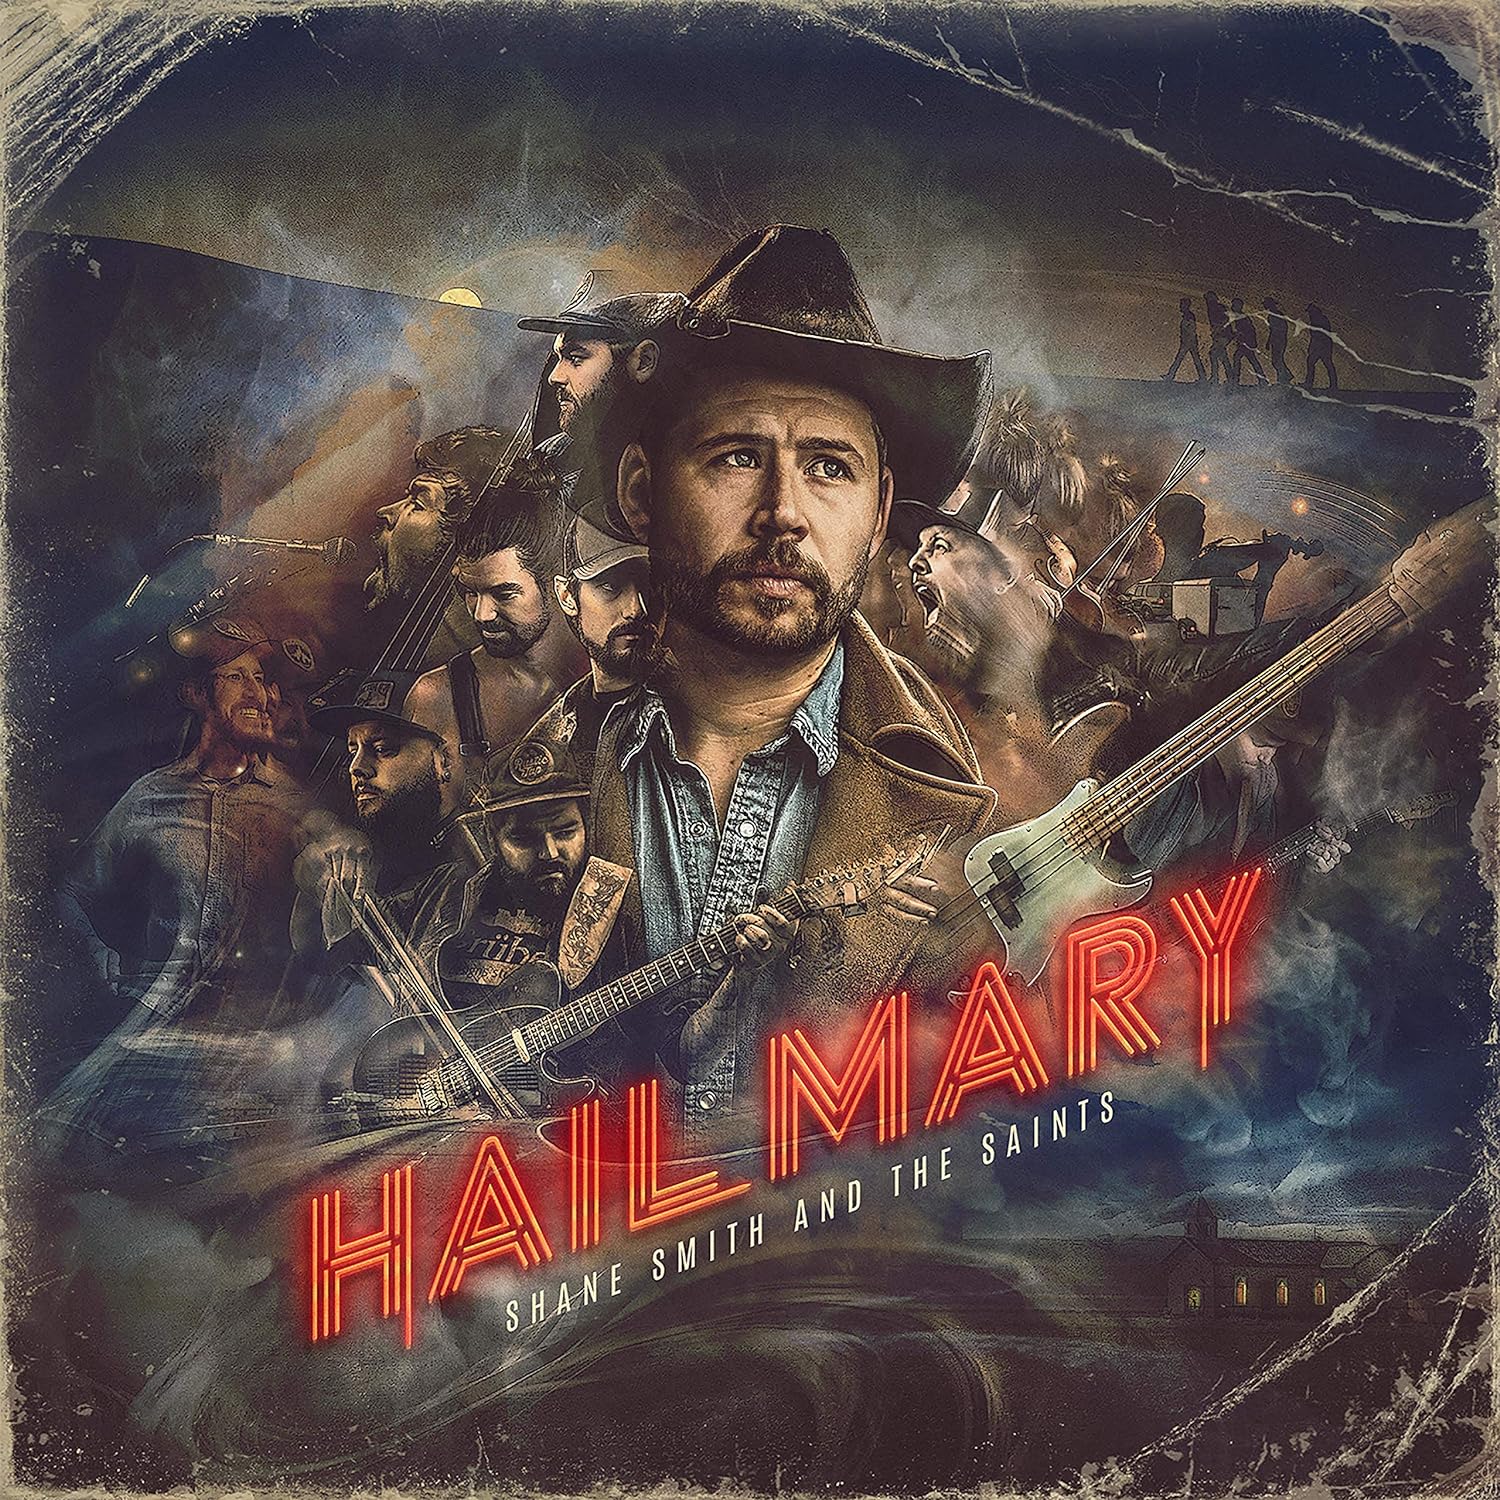 Shane Smith & The Saints – Hail Mary (2019, CD)